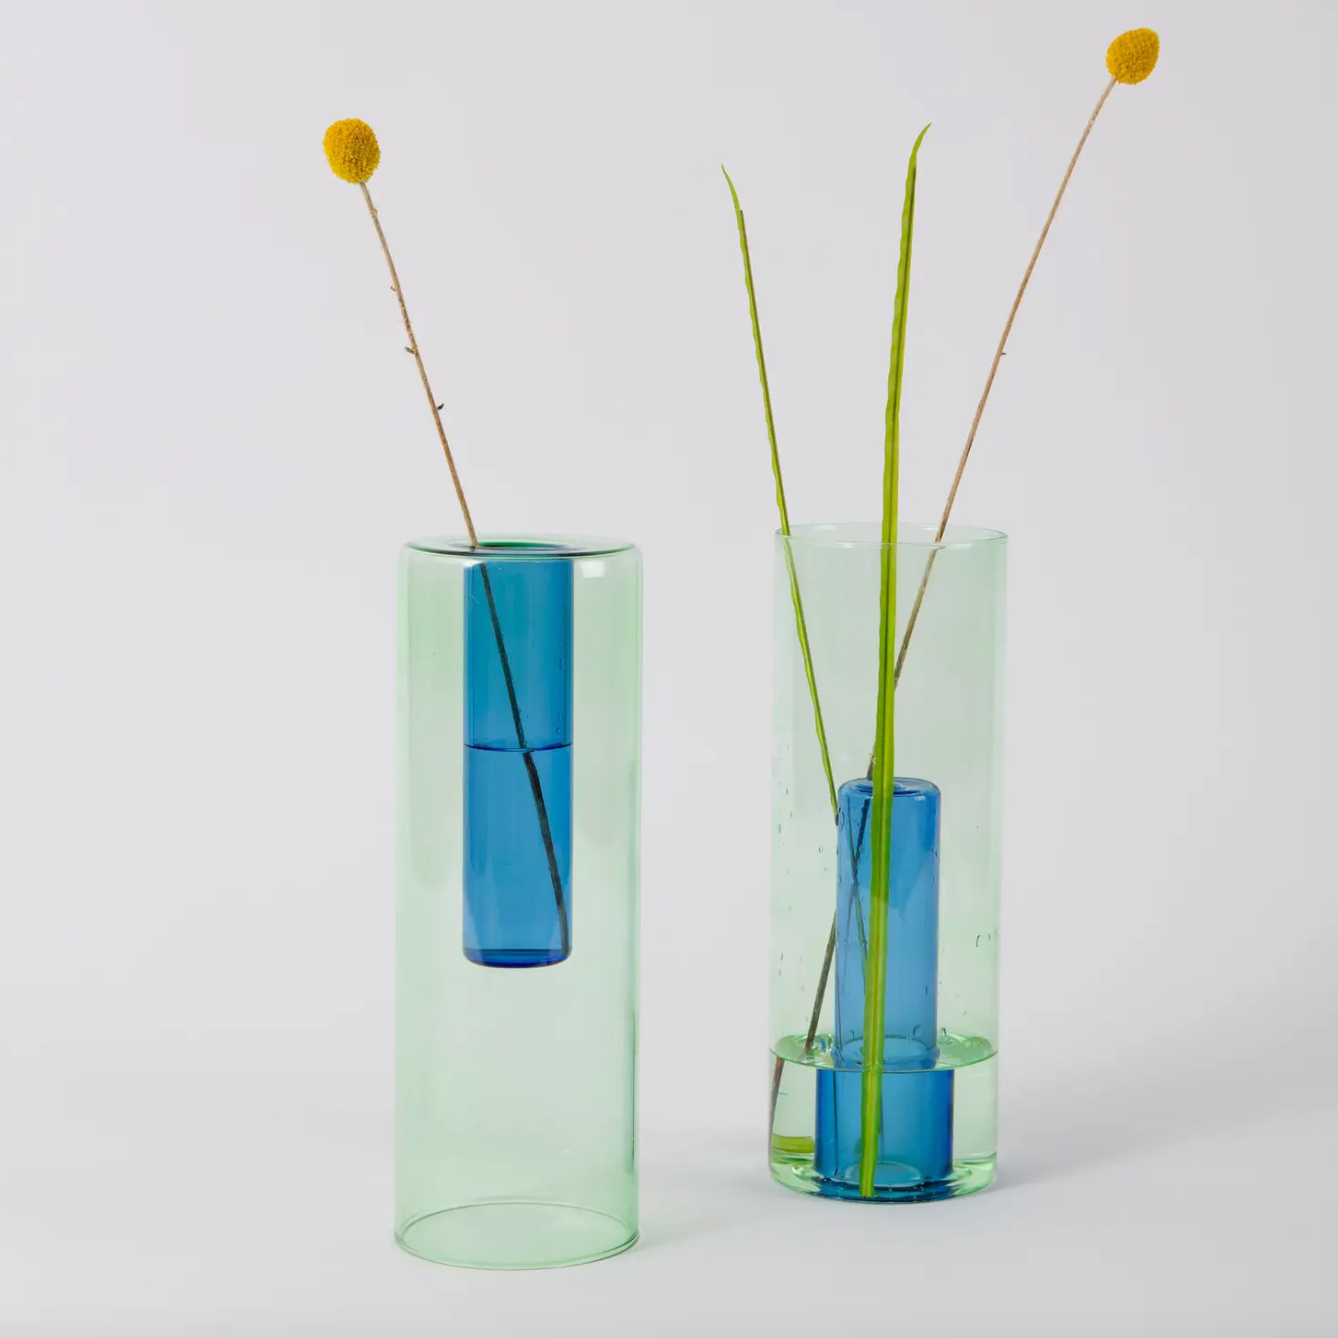 Reversible Large Glass Vase by Block Design vase CANDID HOME Green/Blue  